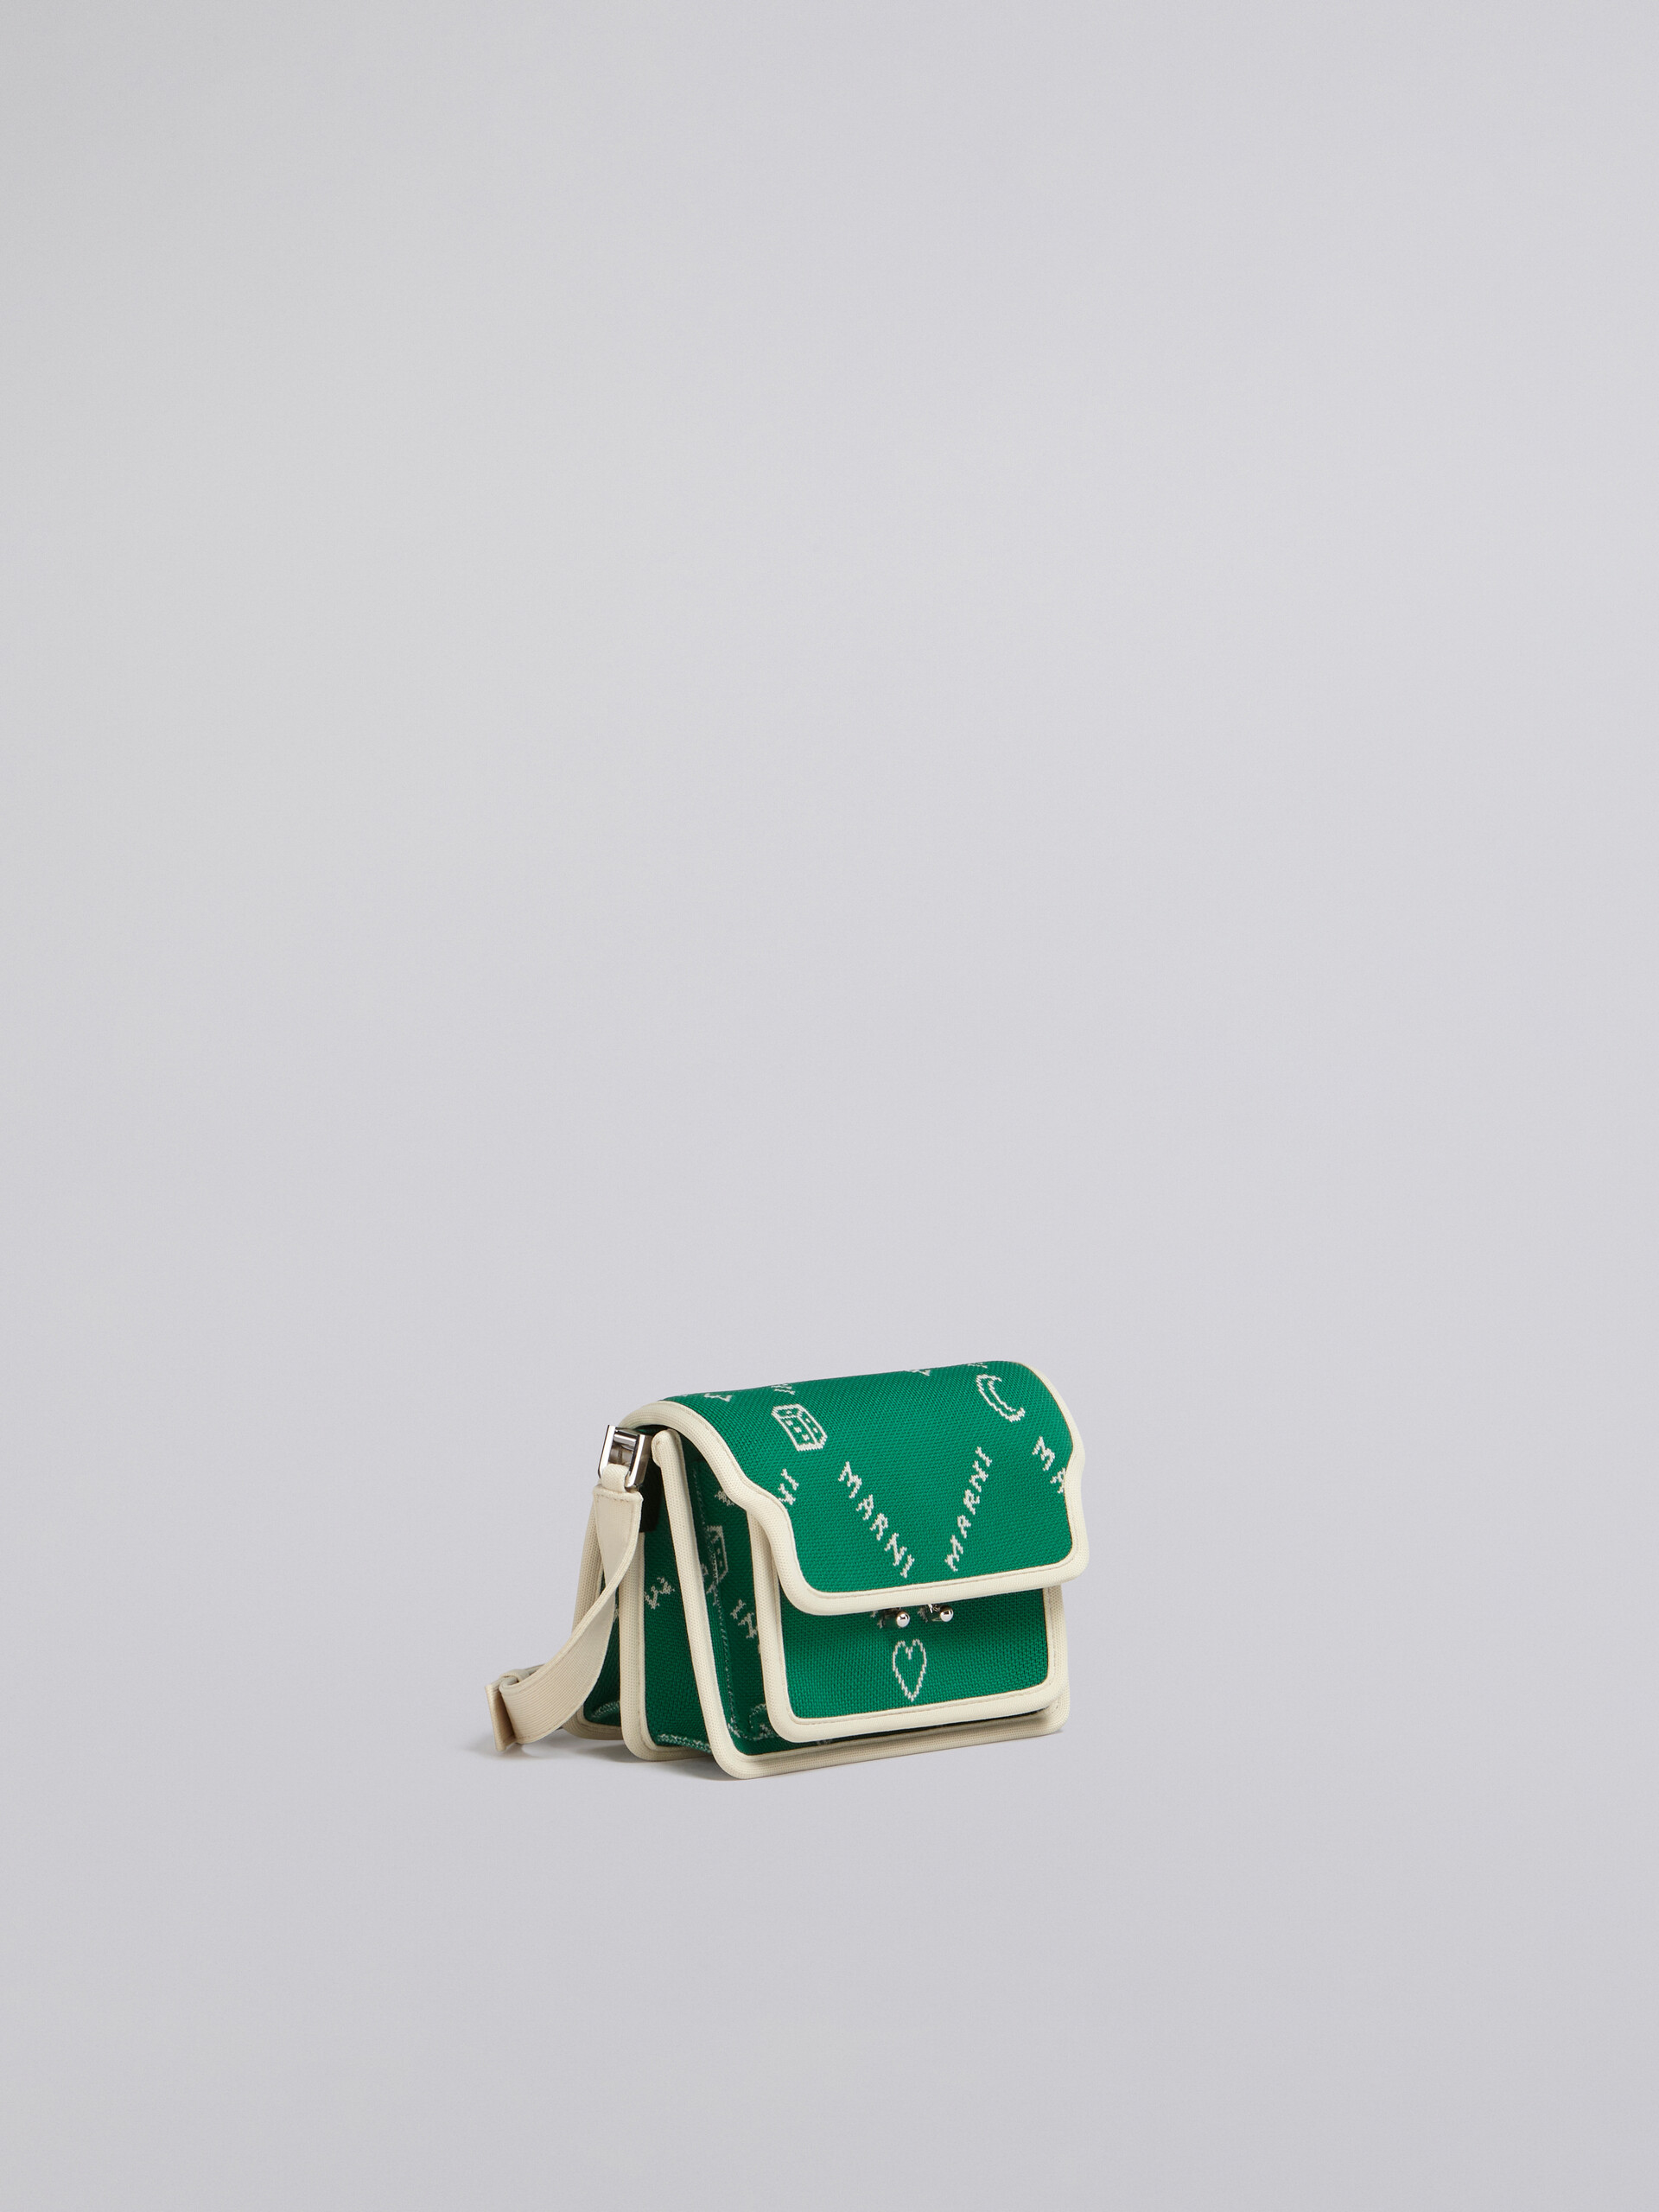 TRUNK SOFT mini bag in green Marnigram jacquard - Shoulder Bag - Image 6